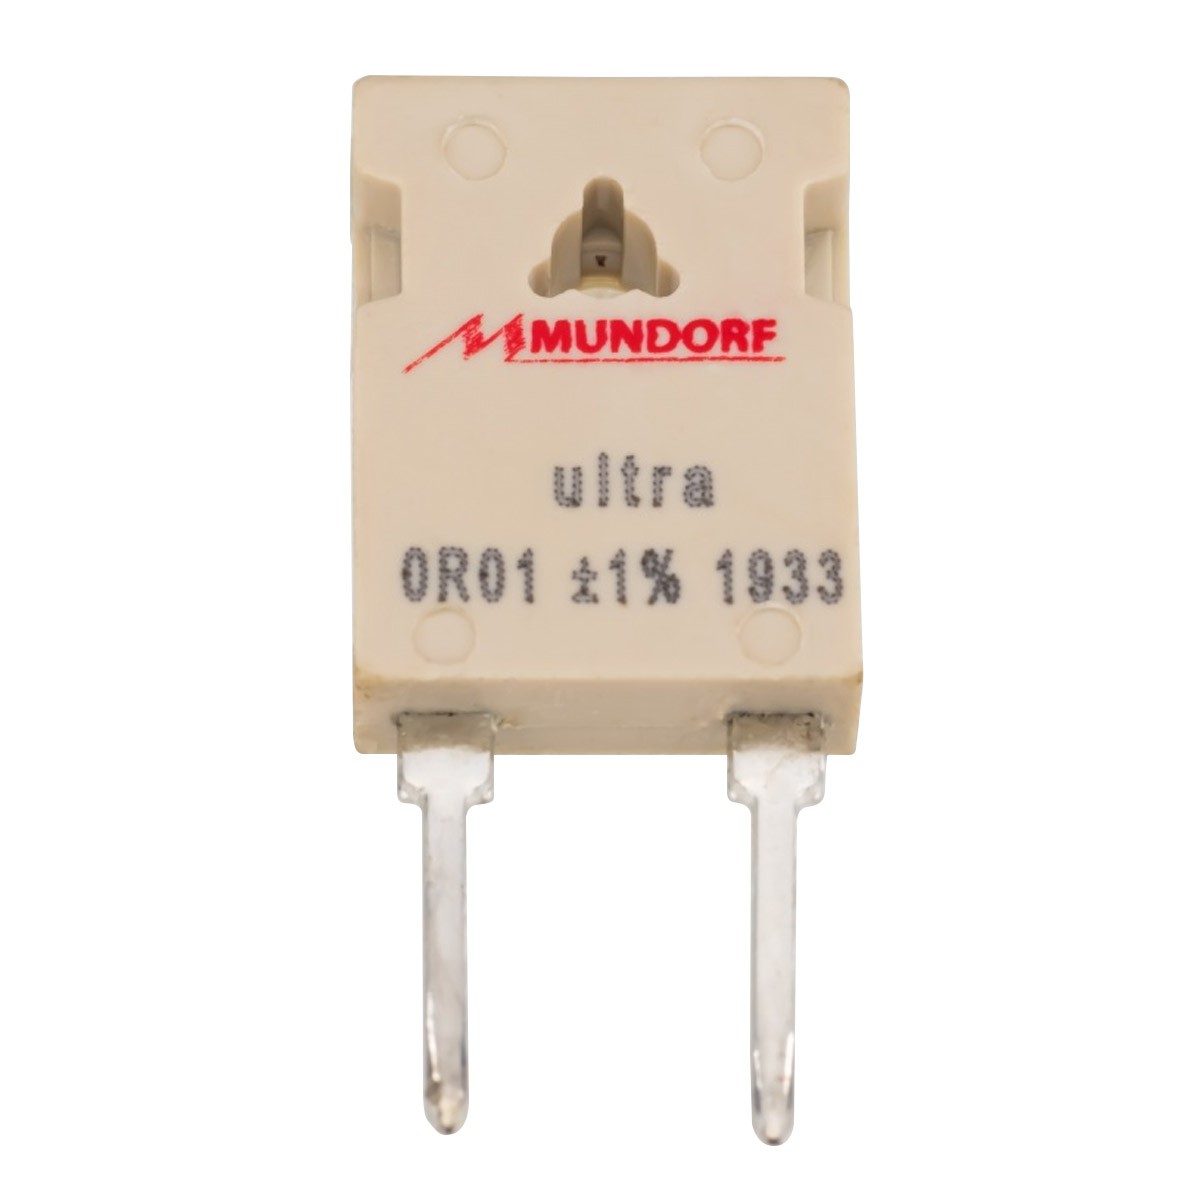 MUNDORF MRESIST ULTRA Resistor 30W 3.9 Ohm